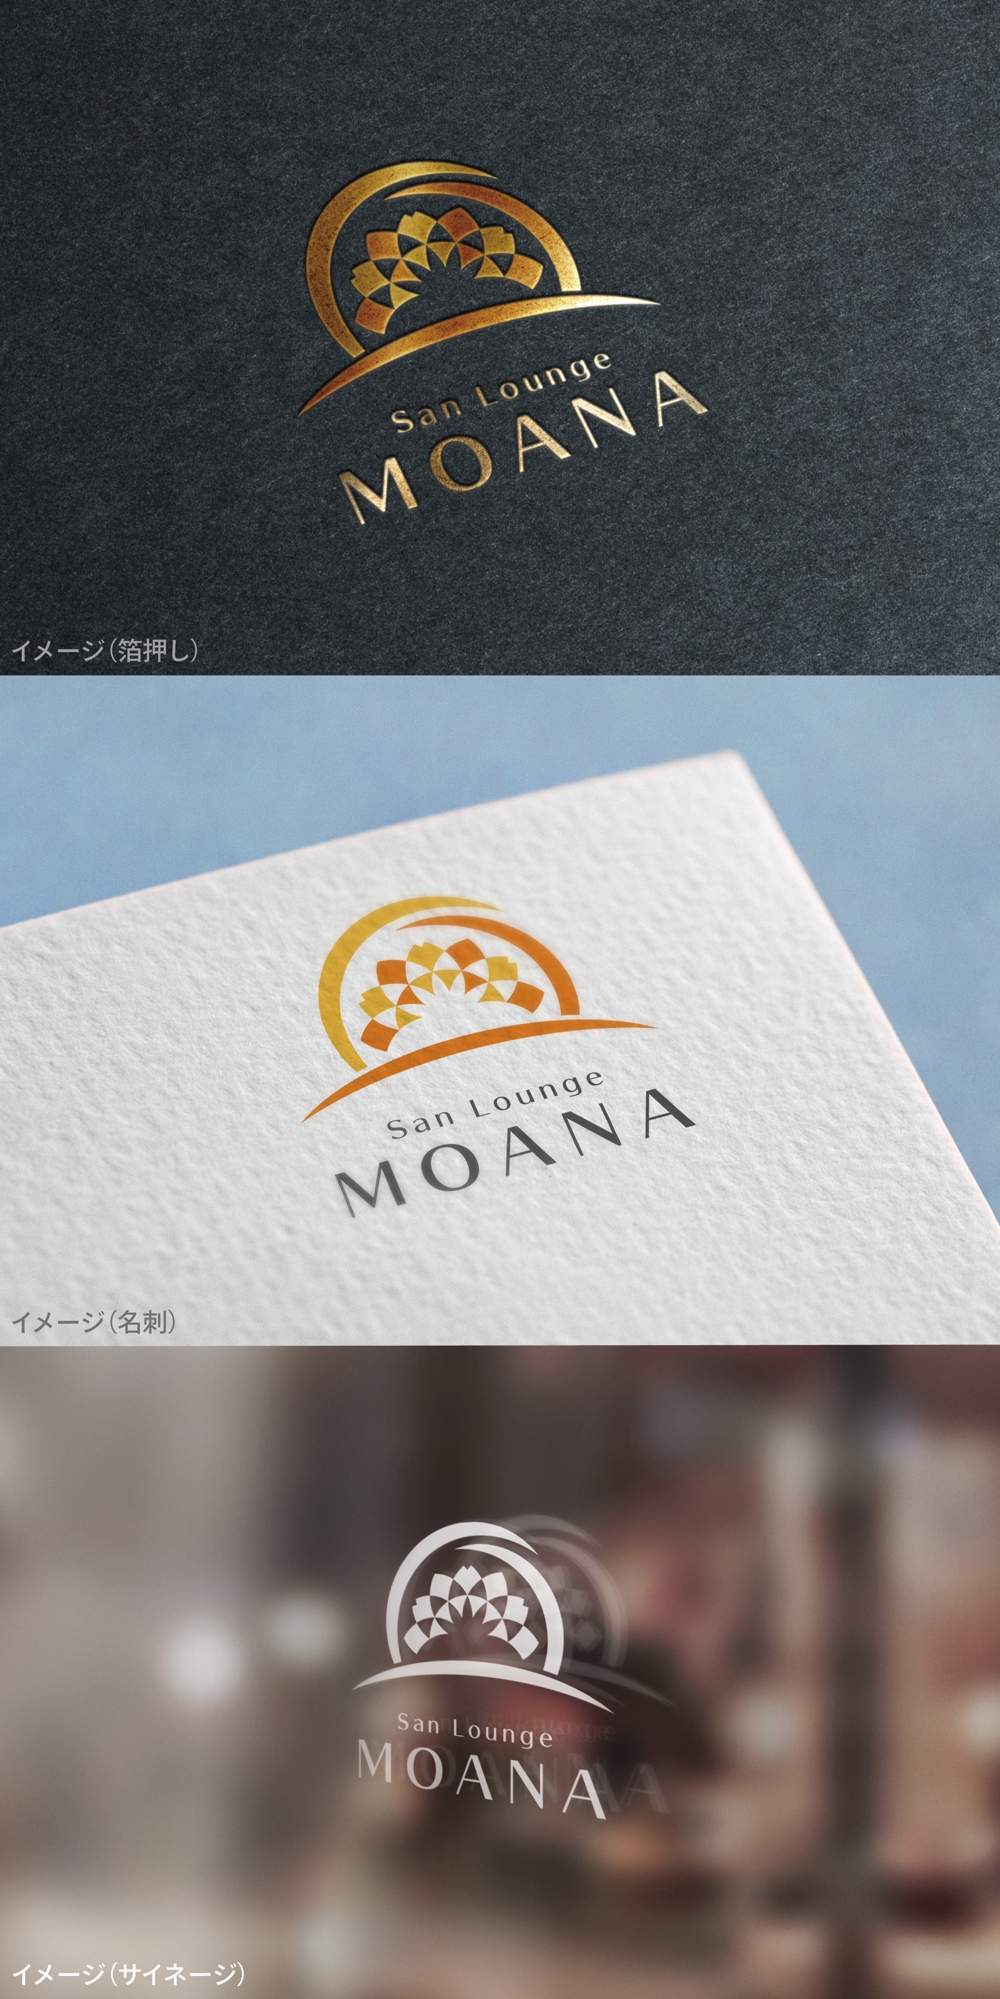 San Lounge MOANA_logo01_01.jpg